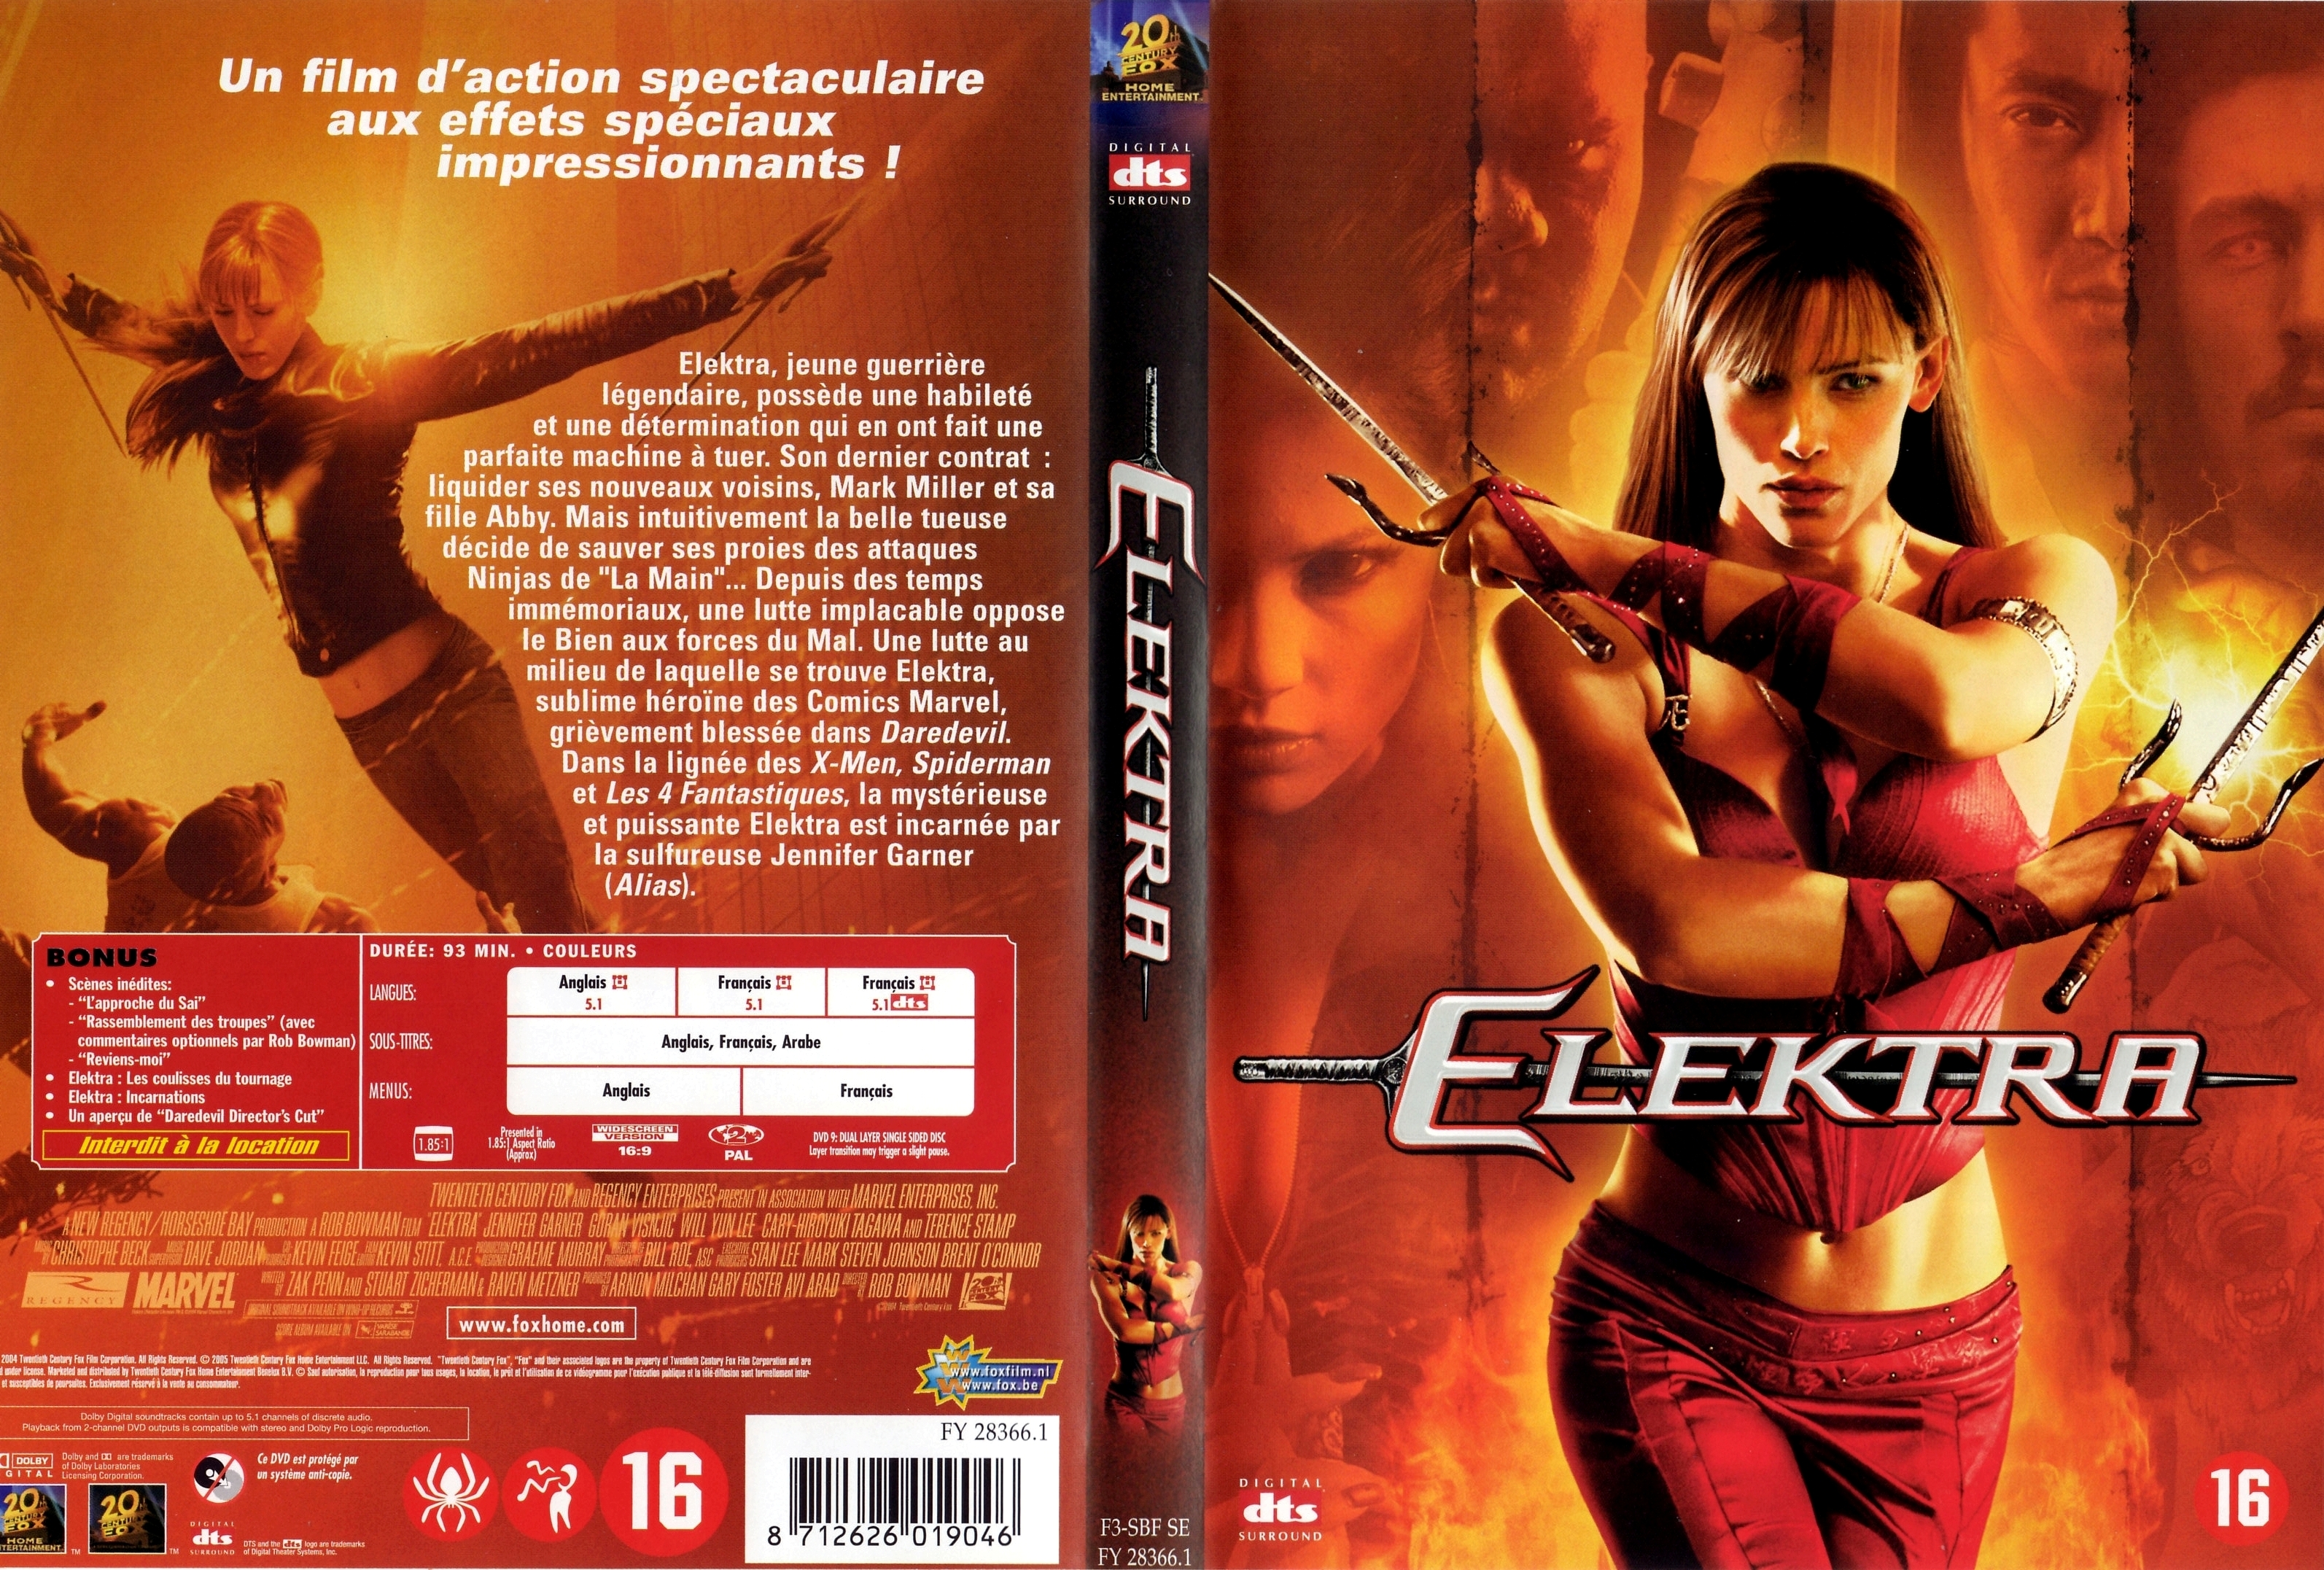 Jaquette DVD Elektra v2